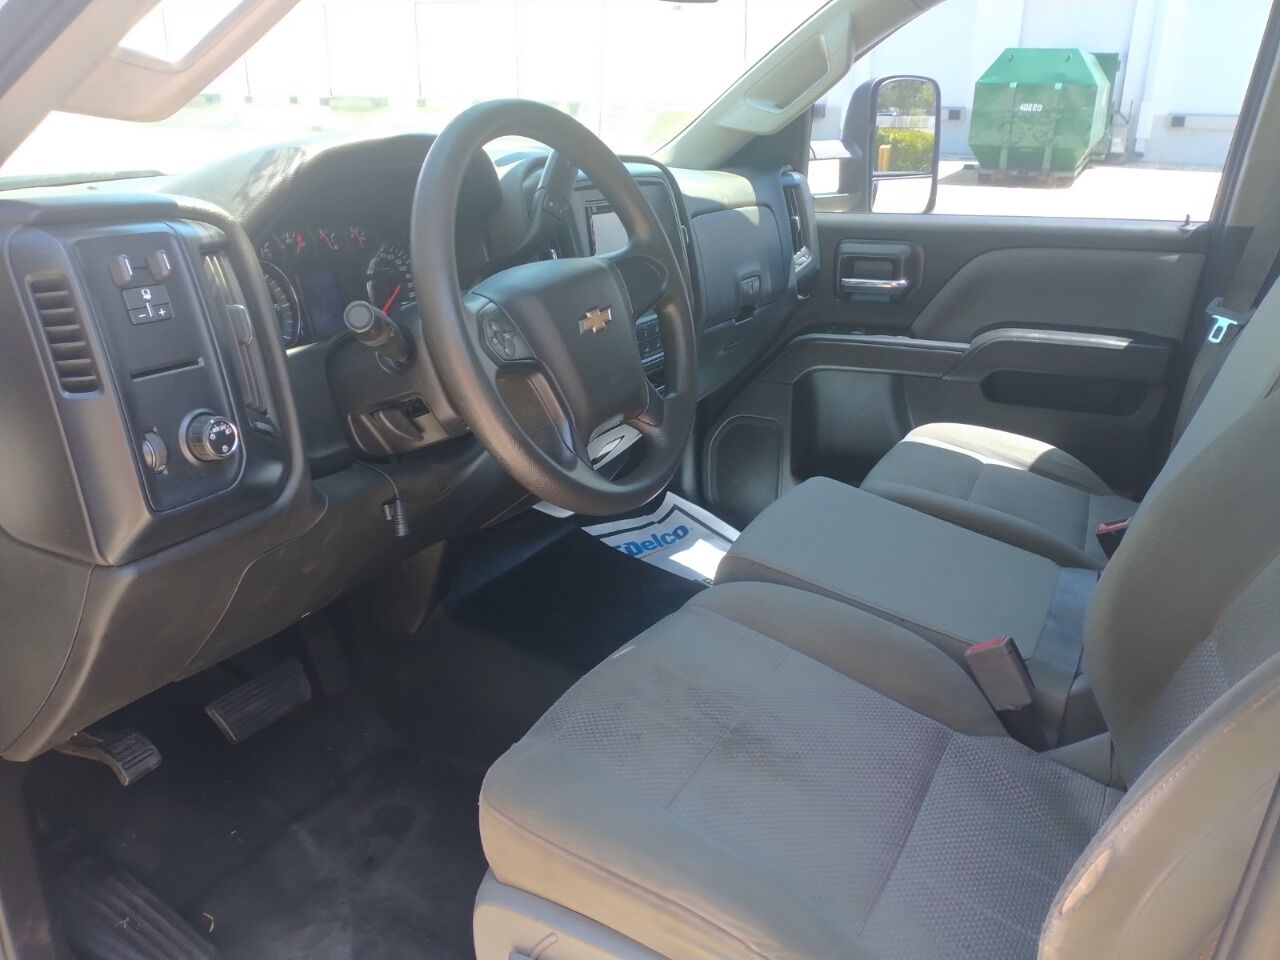 2015 Chevrolet Silverado Pickup - $12,950